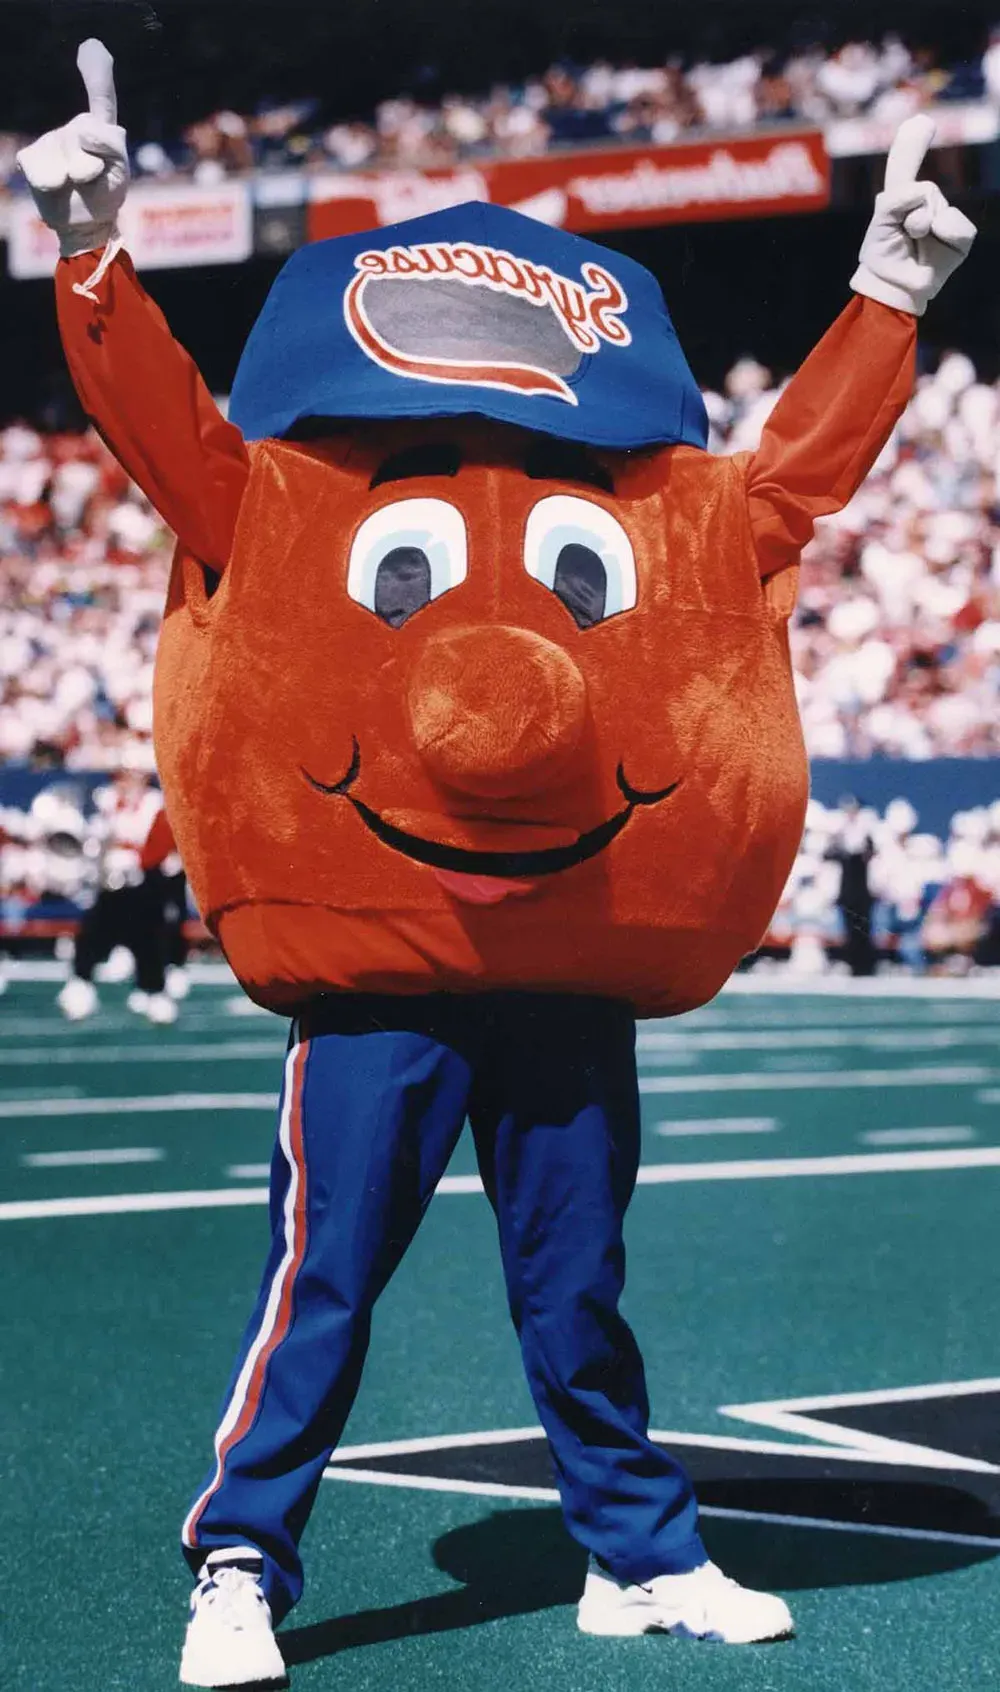 Vintage Otto the orange mascot cheering inside of stadium.